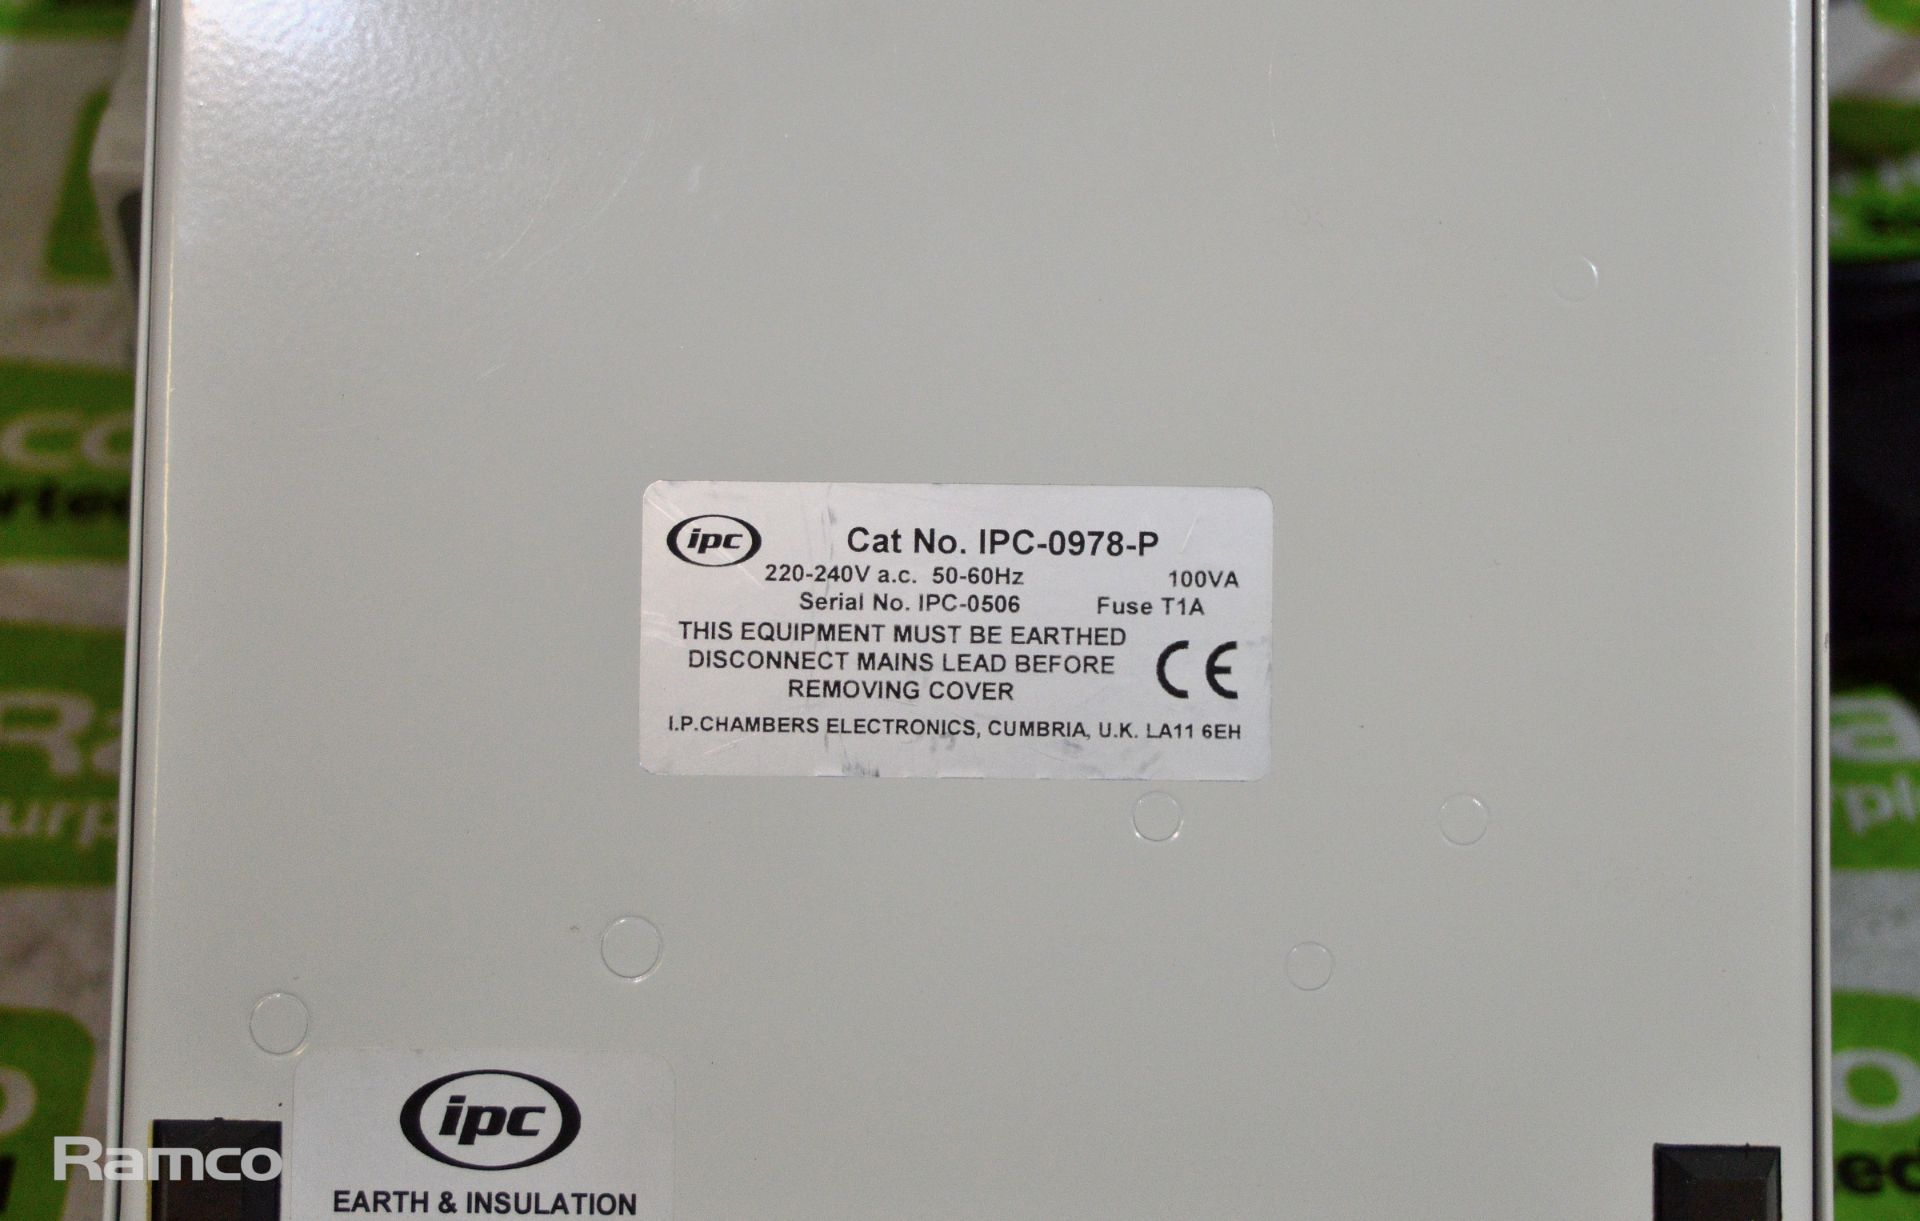 2x IPC -0978-P Dual Output Power Supply Units - Image 3 of 3